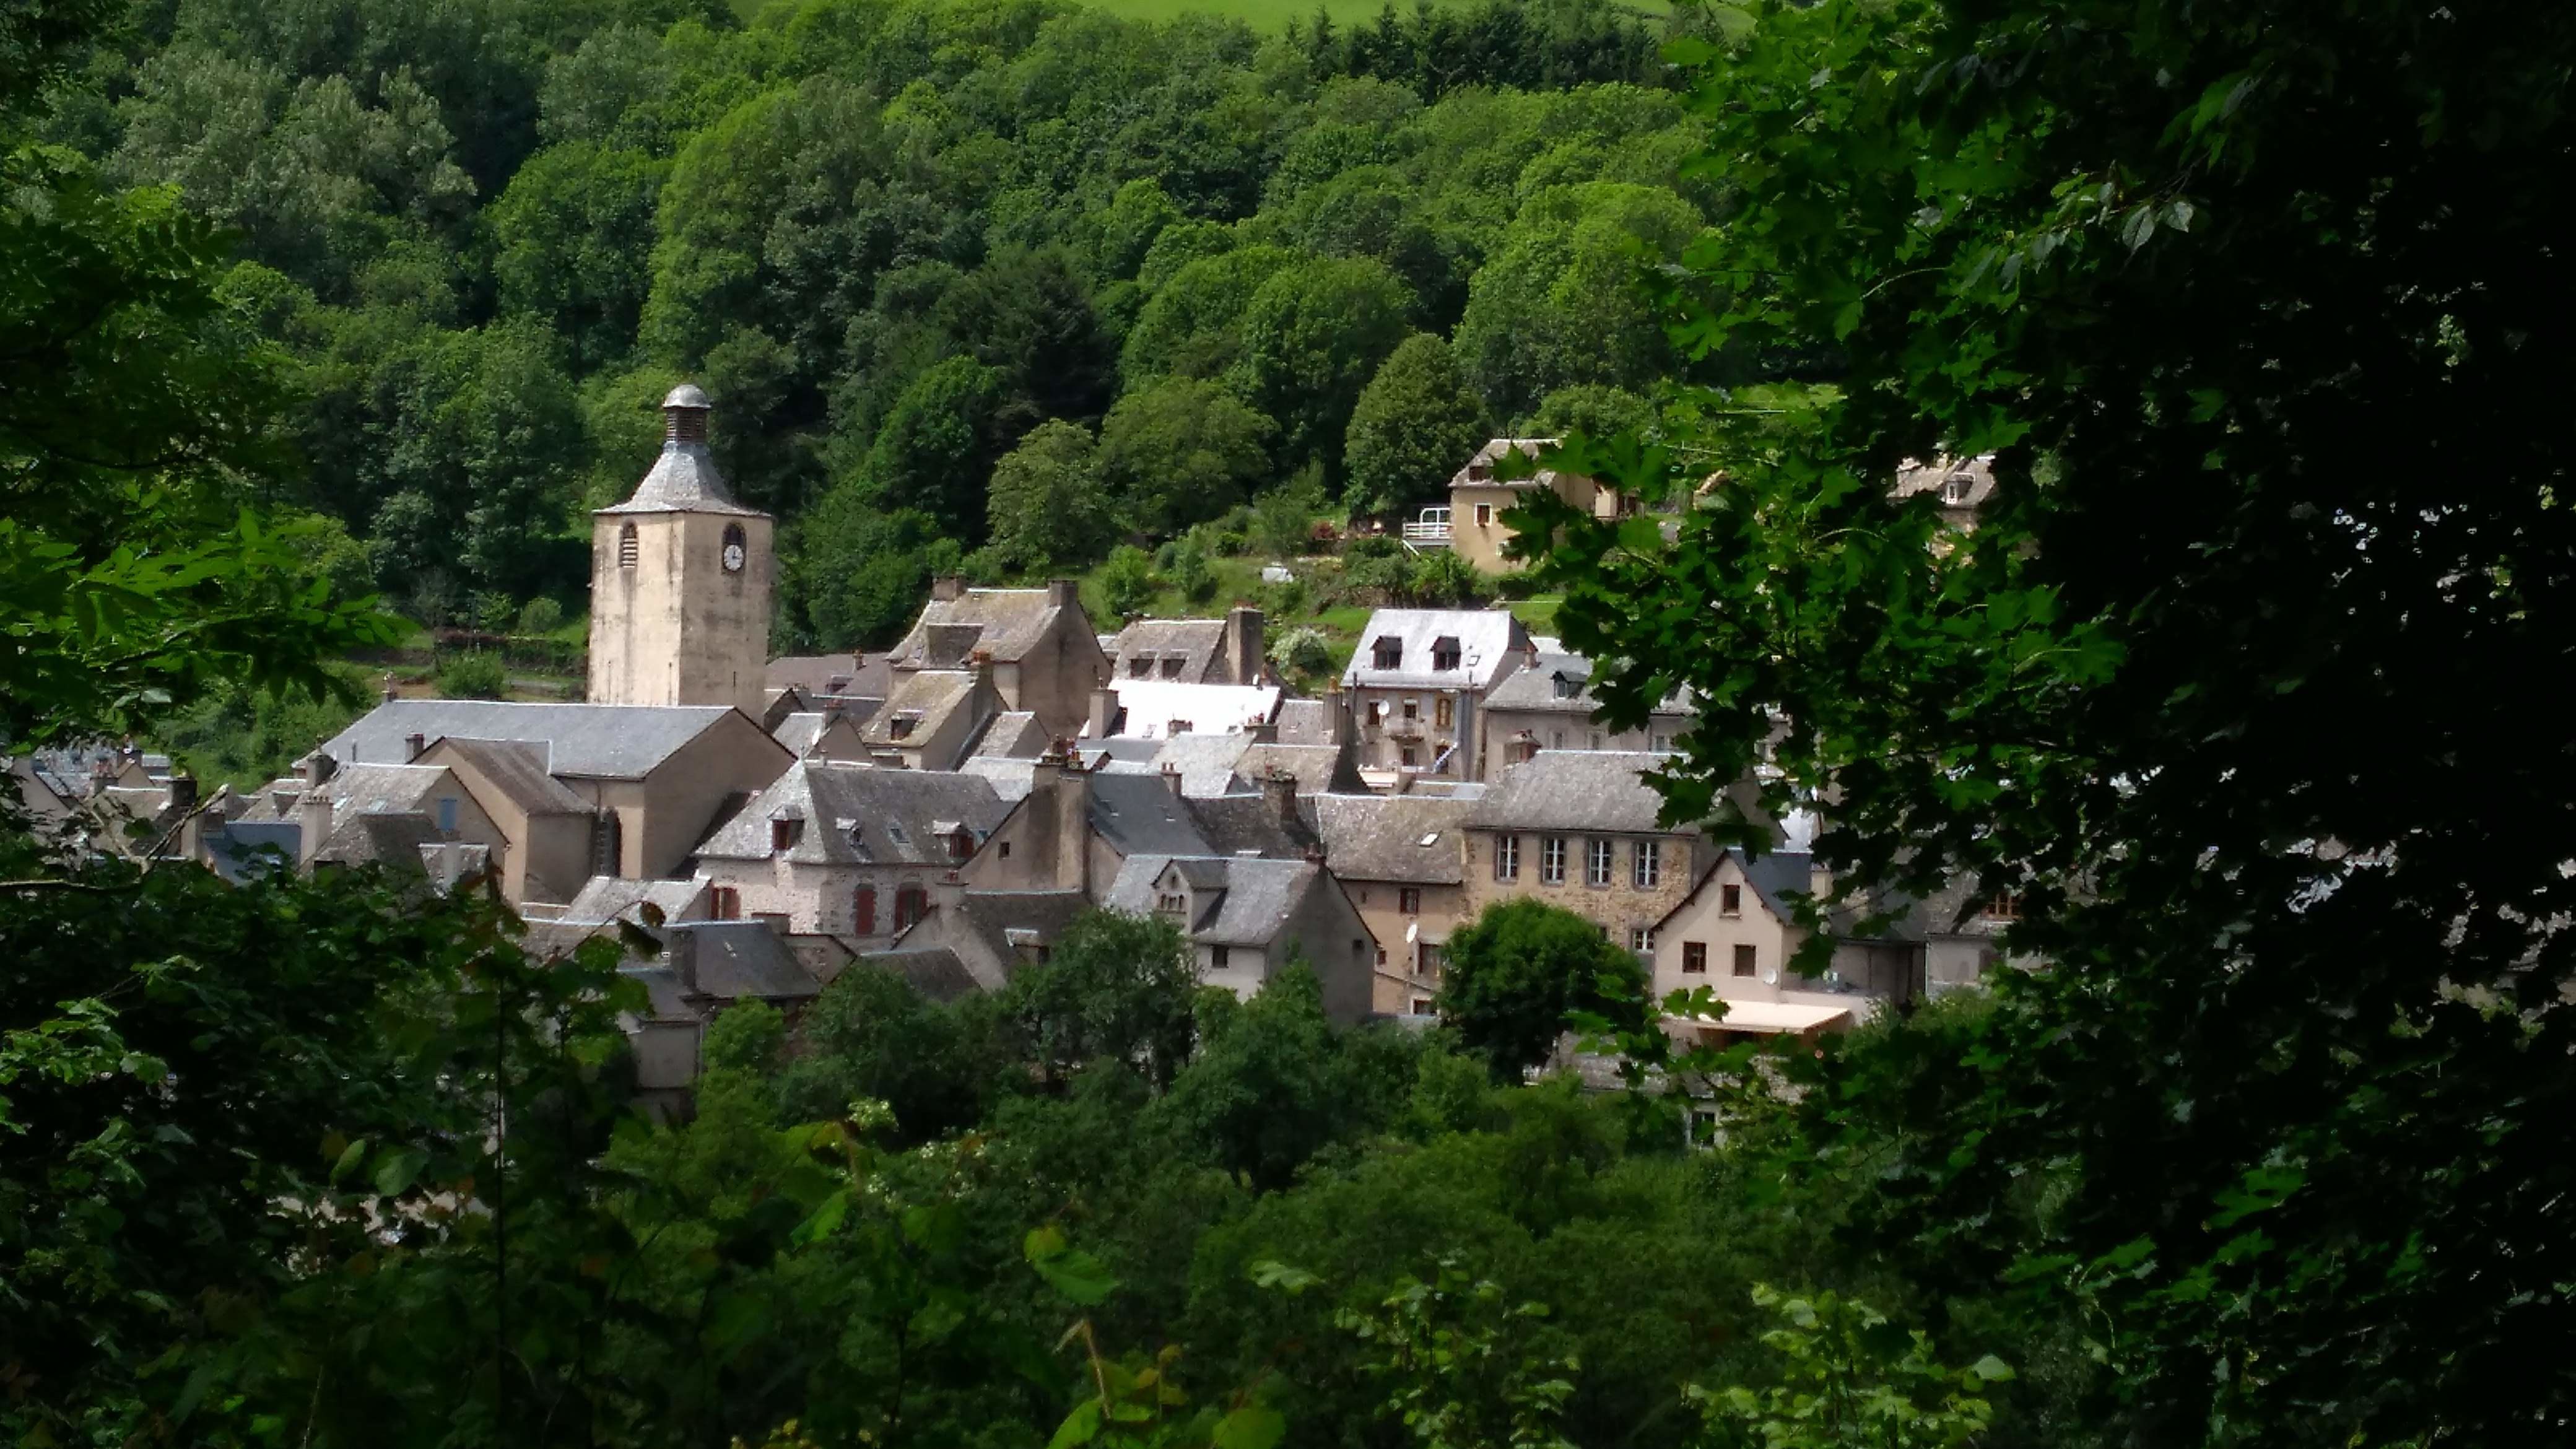 Saint Chély d'Aubrac